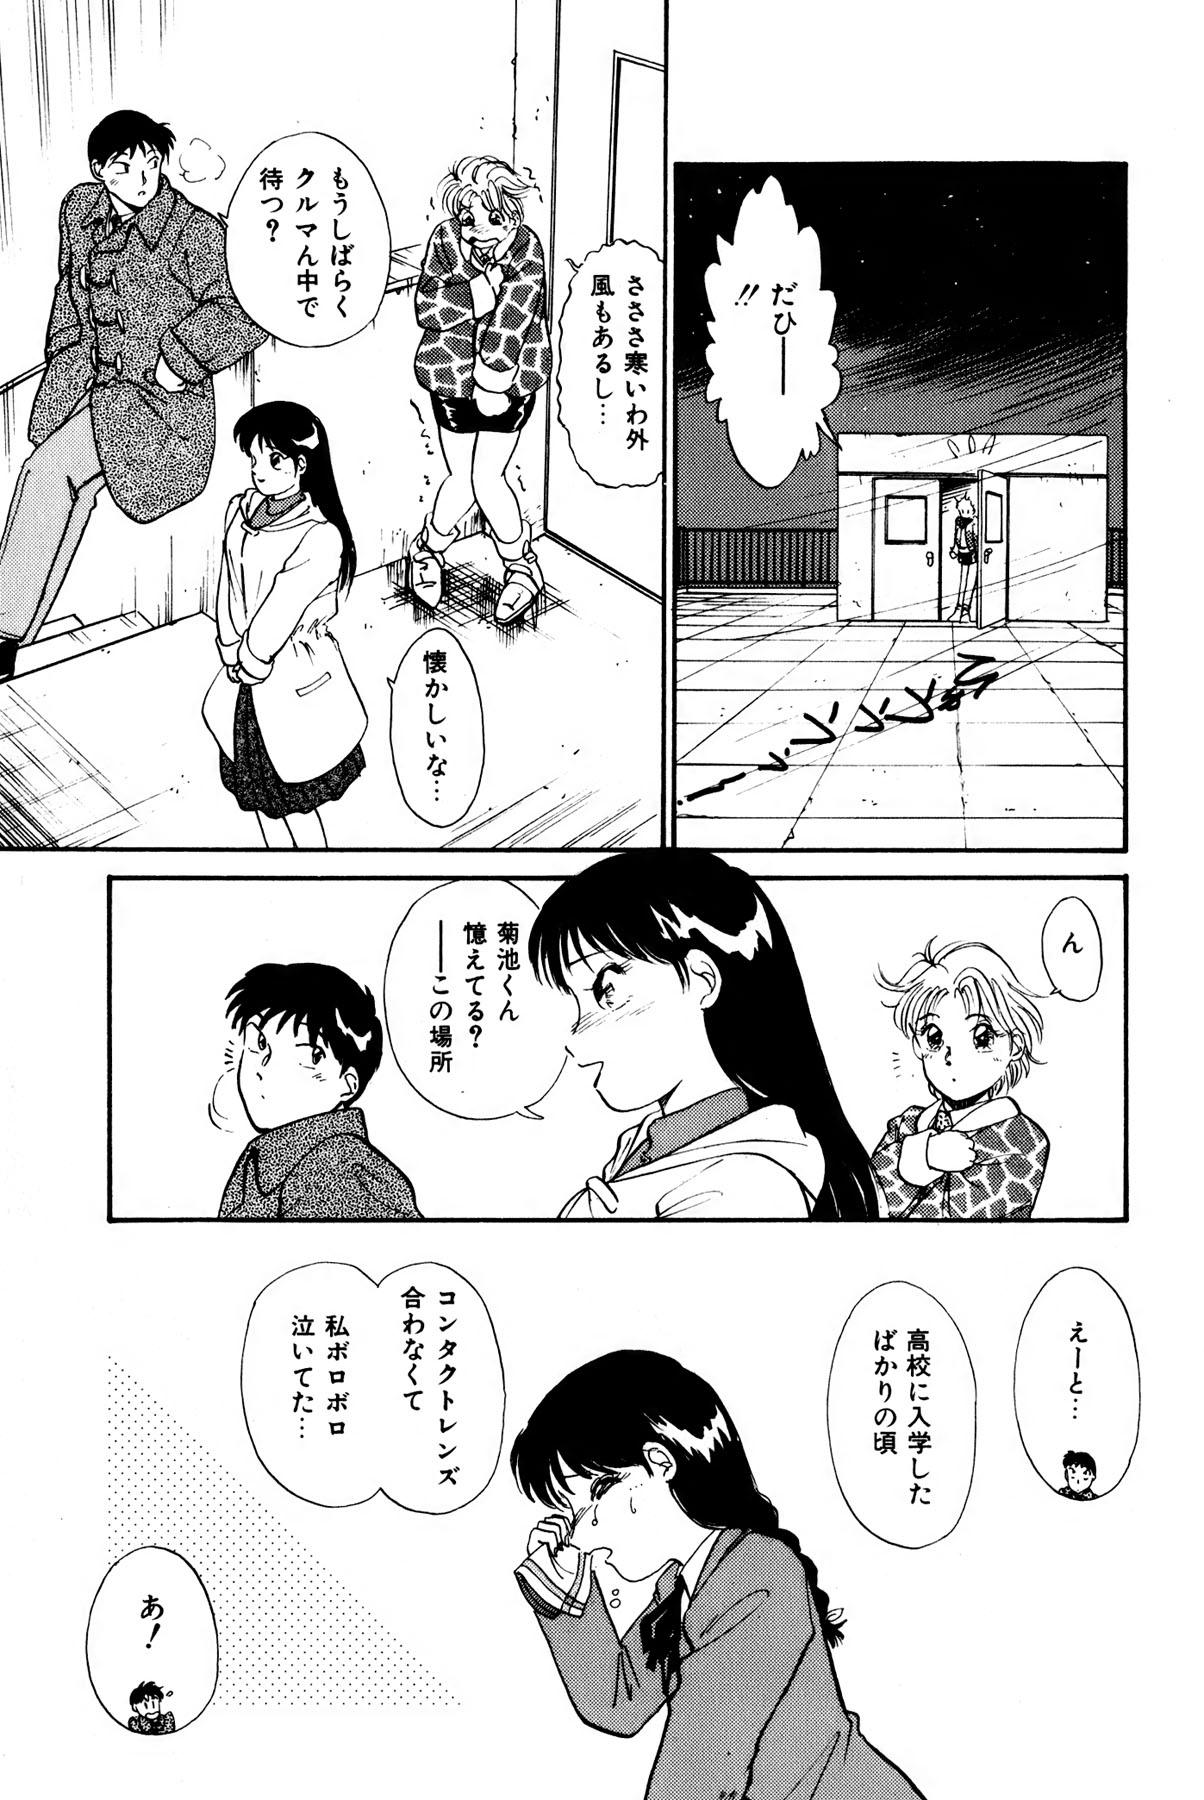 Otakara Comic 31